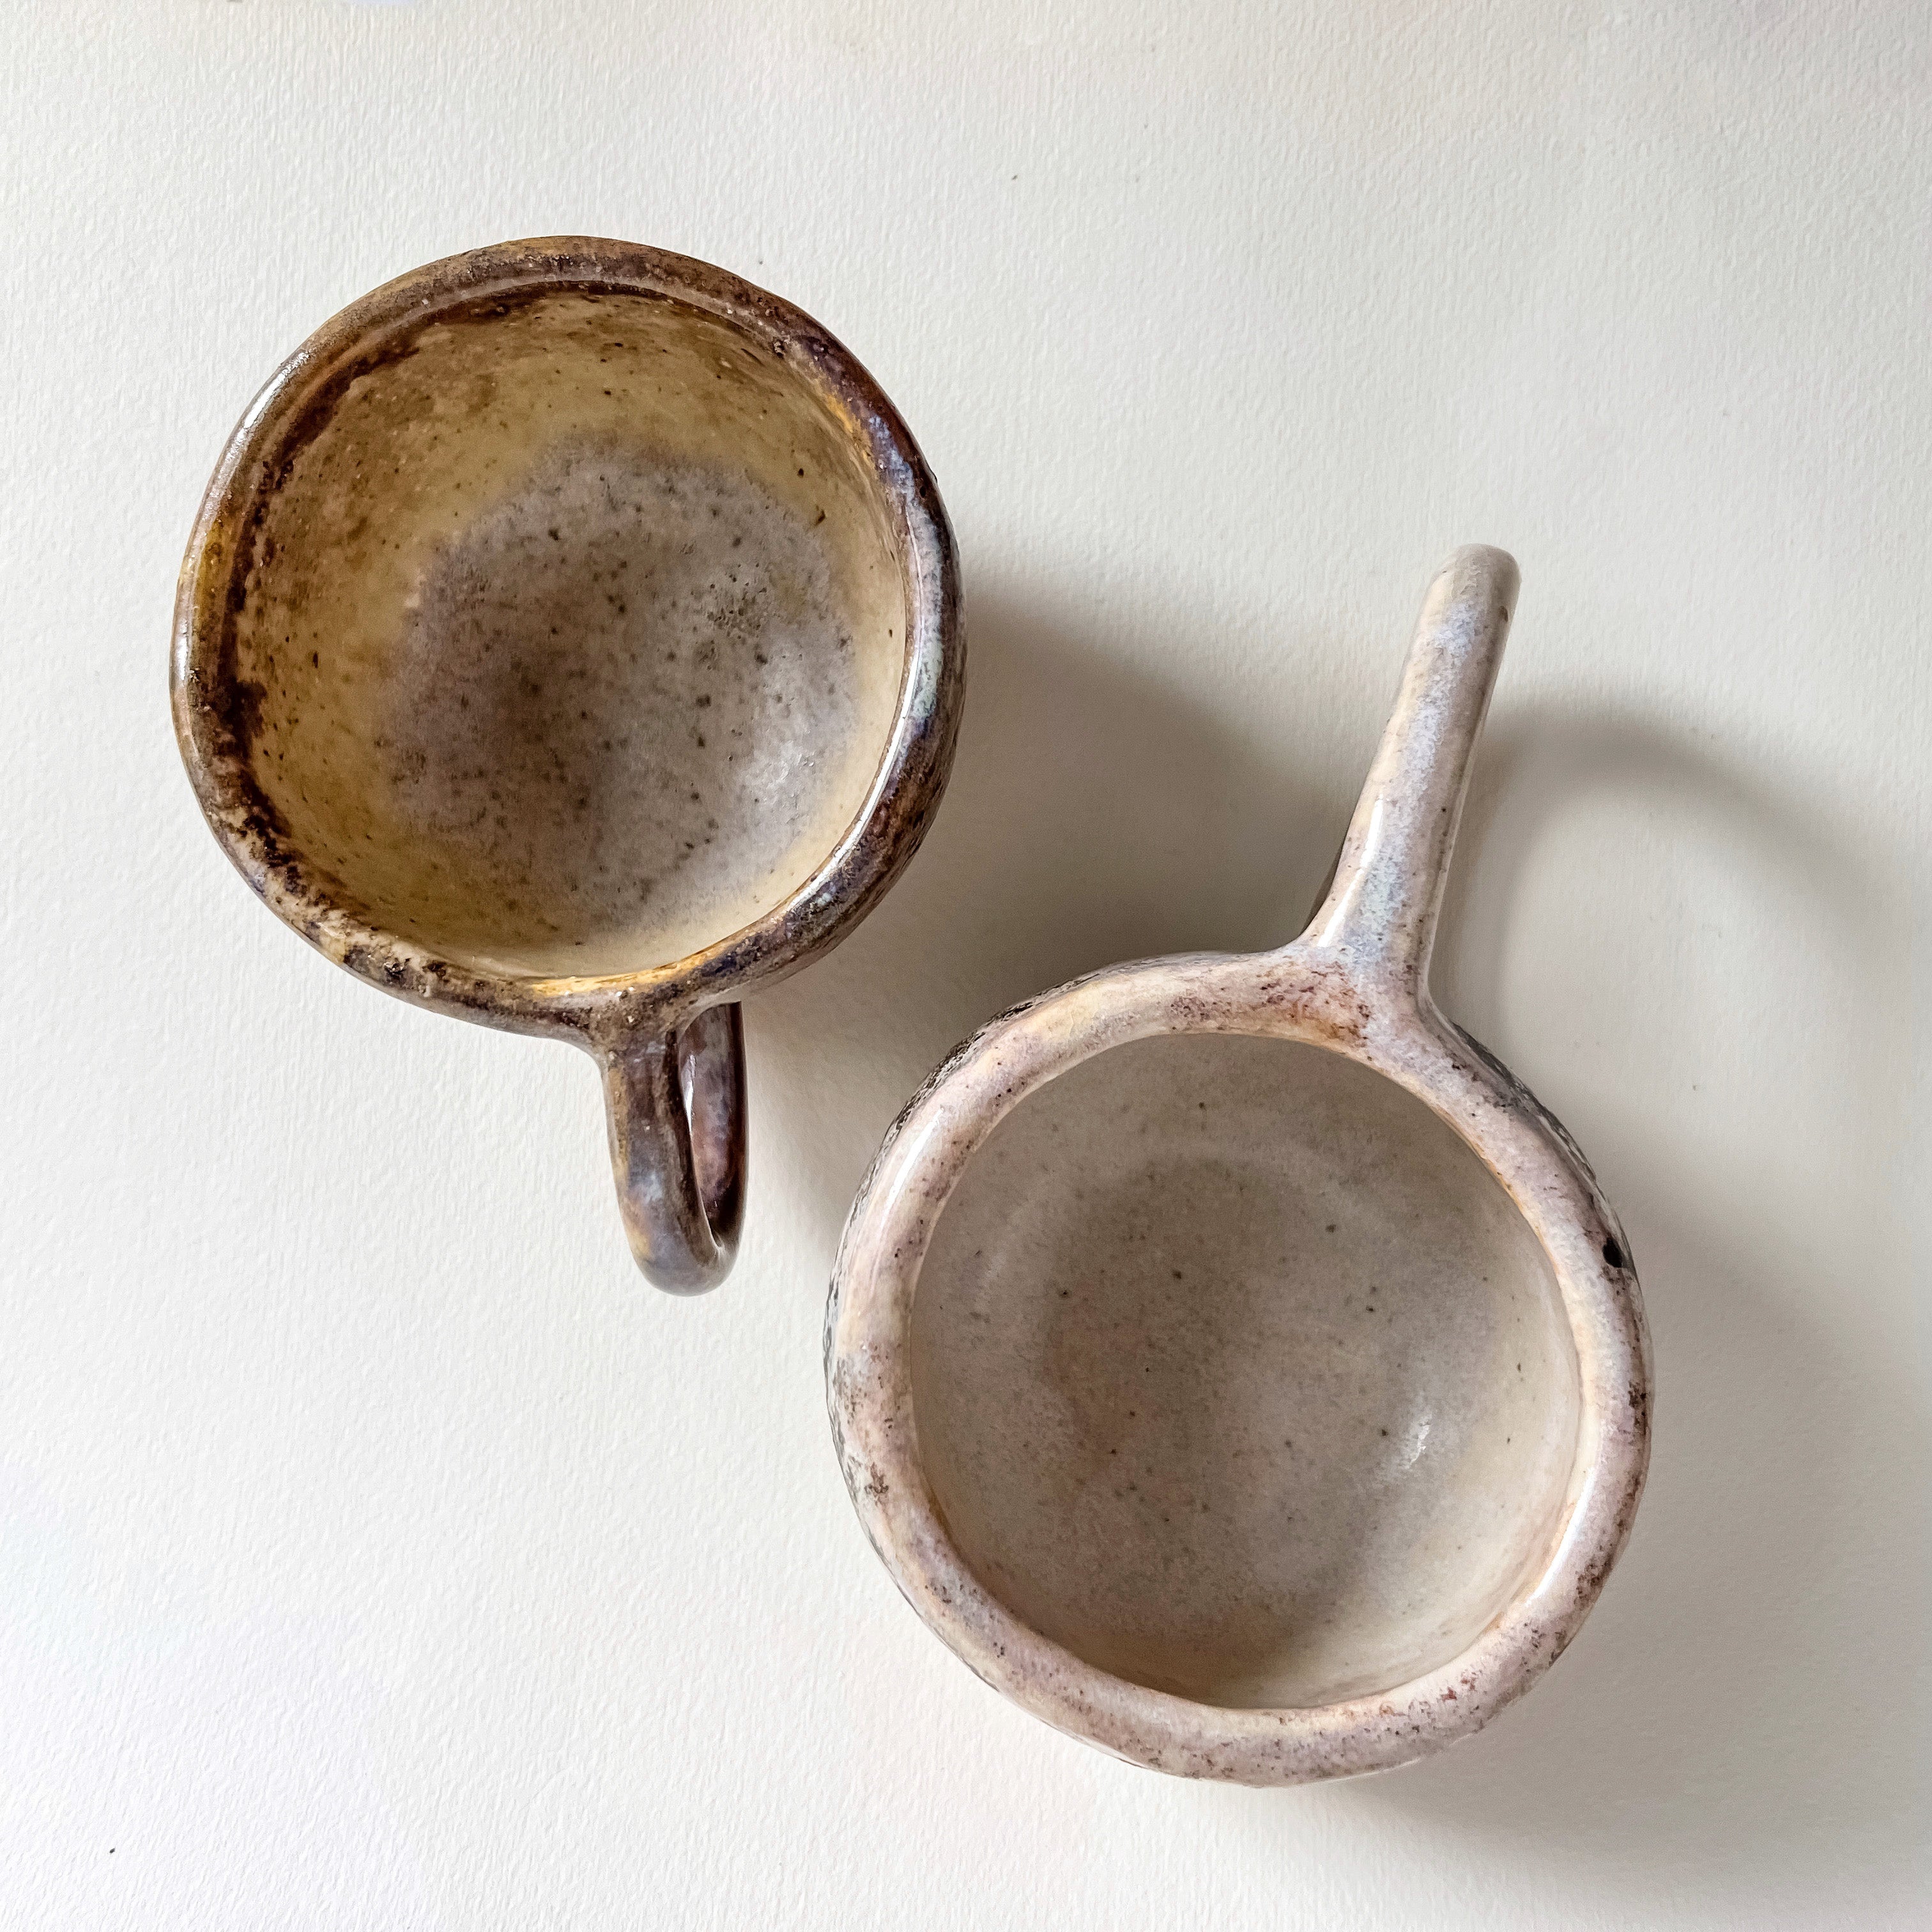 one of a kind coffee mug set from Mexico